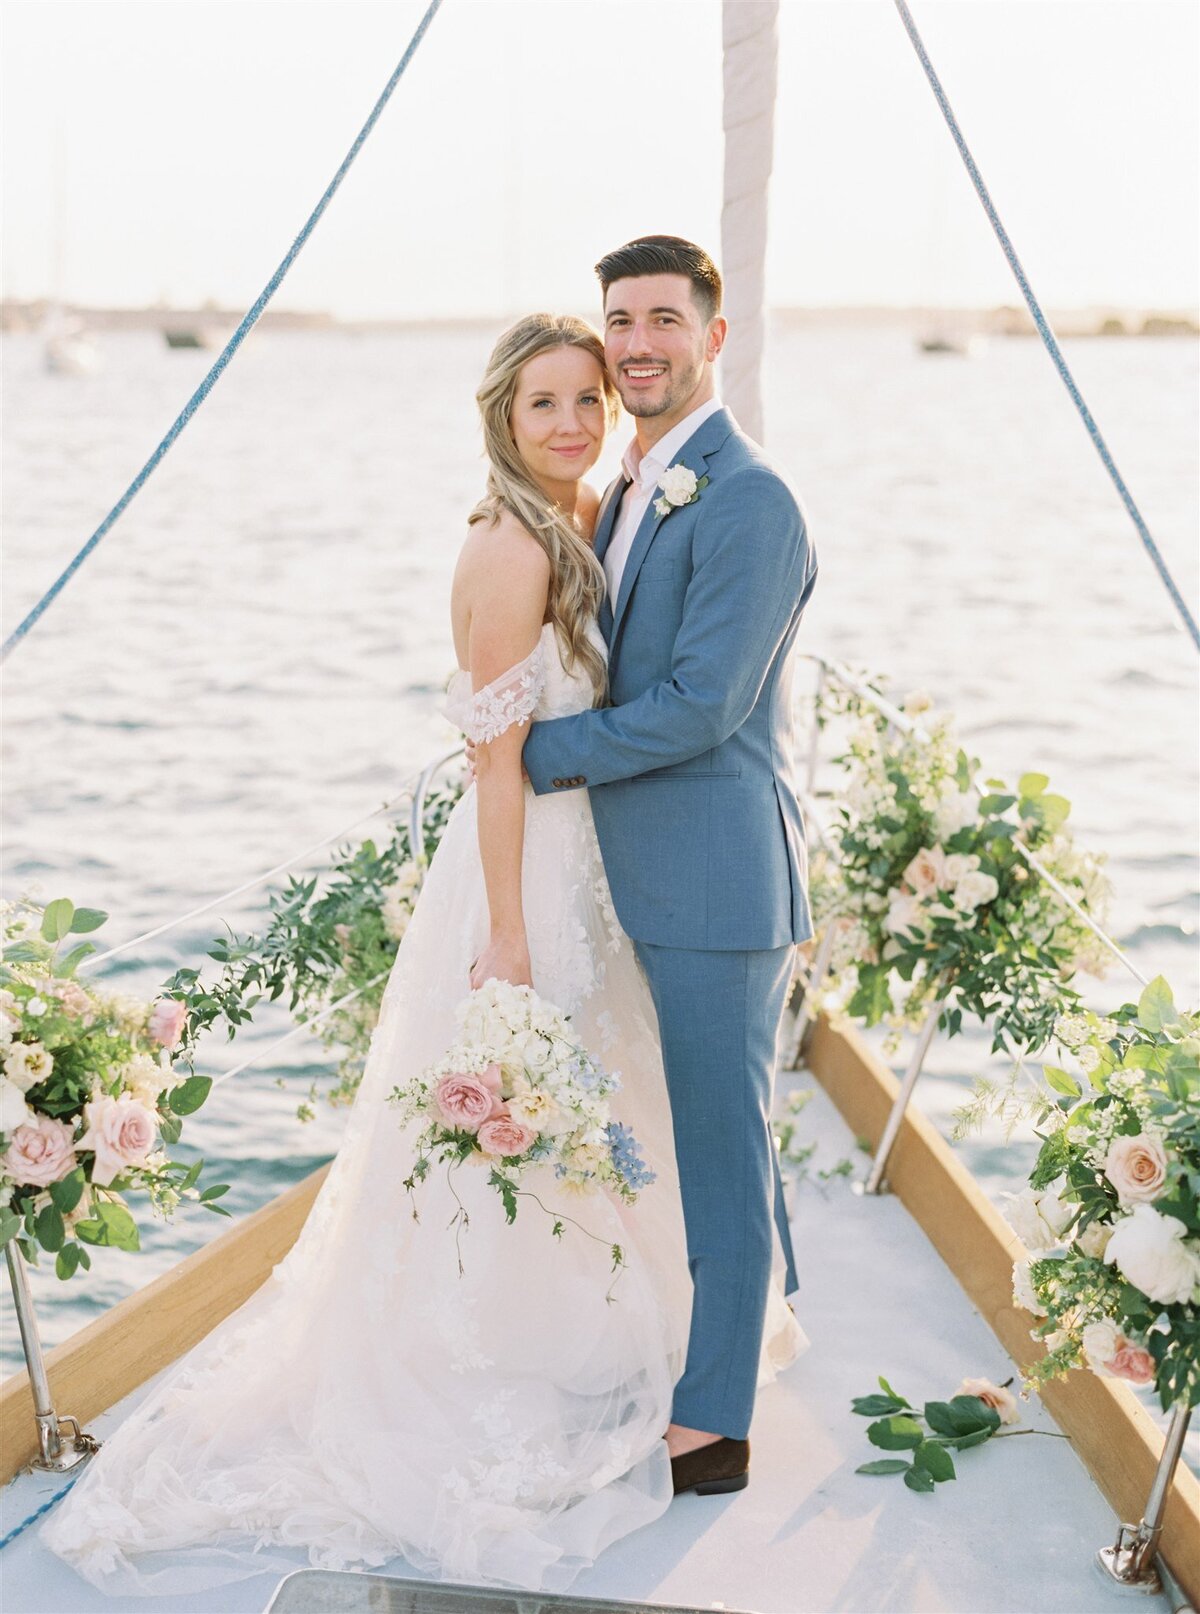 Kate-Murtaugh-Events-RI-wedding-planner-coastal-Newport-luxury-elopement-floral-installation-sail